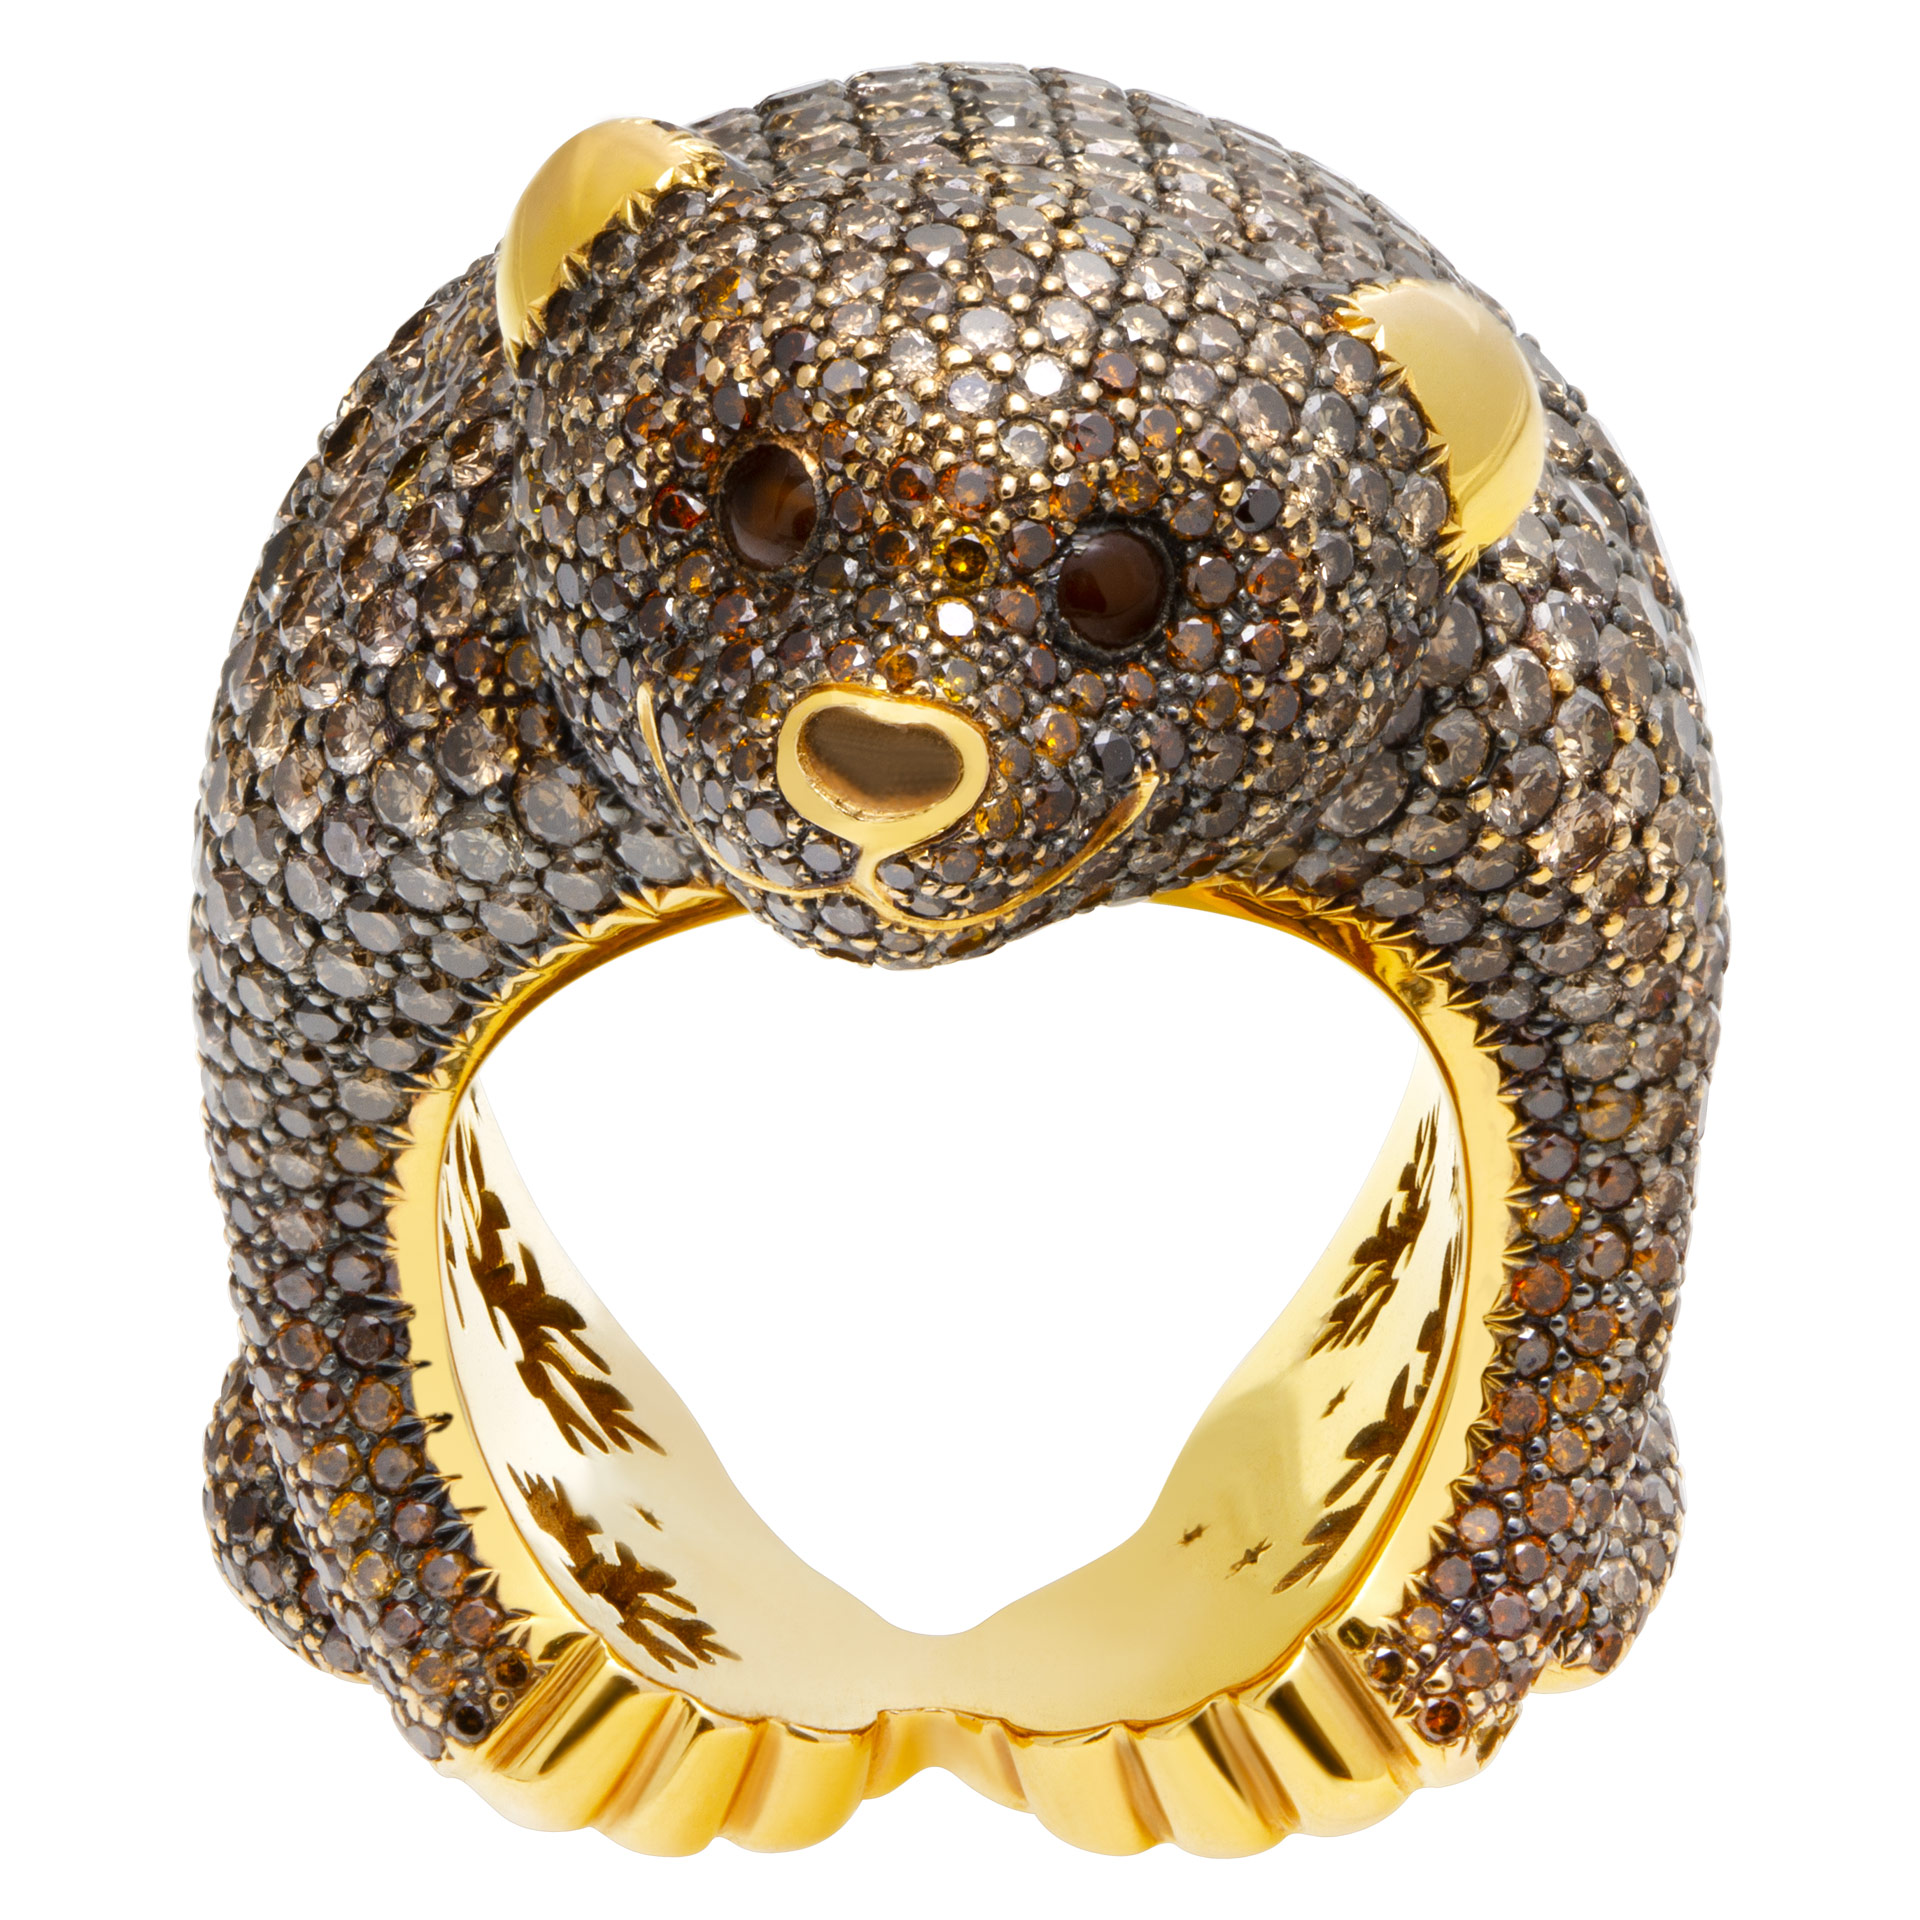 Chopard High Jewelry Diamond Bear Ring. 18K & Natural Chocolate & Champagne Diamonds